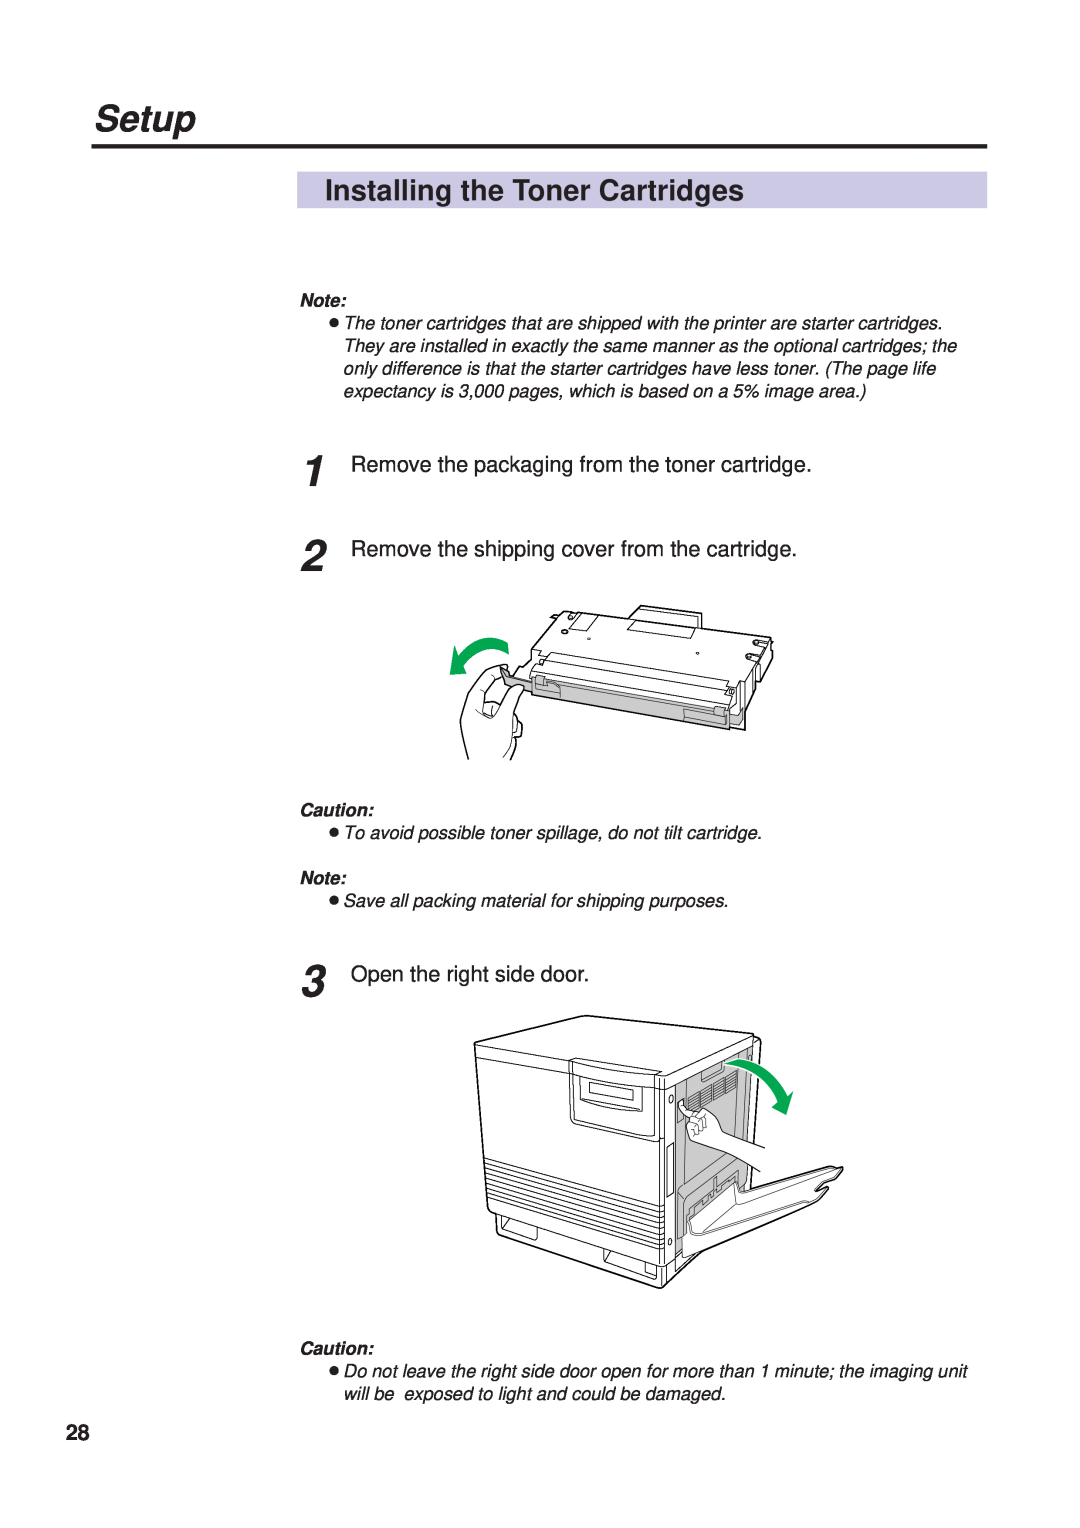 Panasonic KX-PS8000 manual Installing the Toner Cartridges, Remove the packaging from the toner cartridge, Setup 